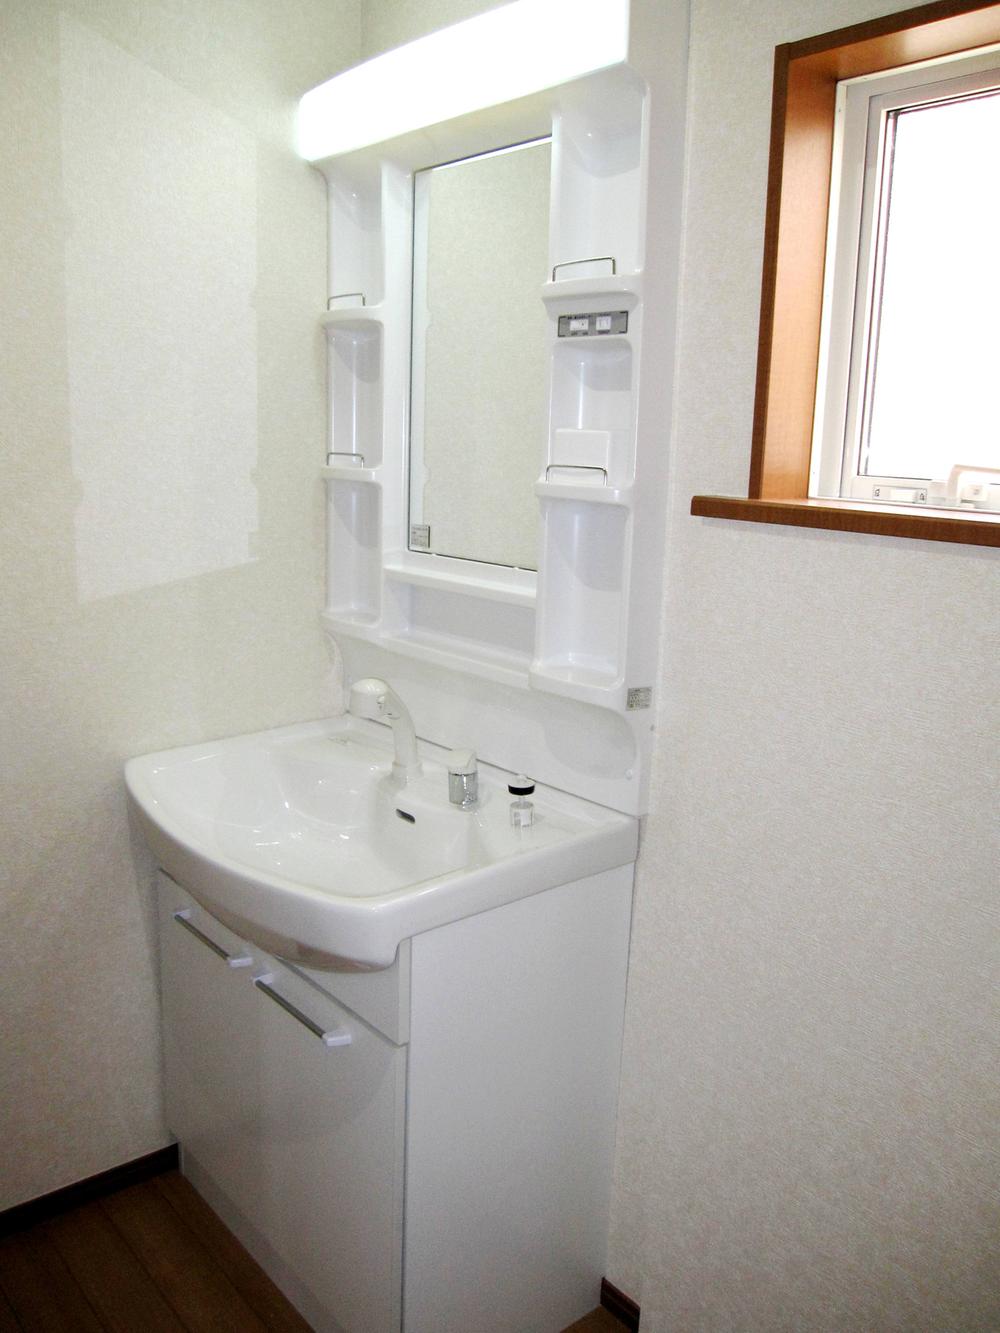 Wash basin, toilet. Wash basin with a retractable shower head